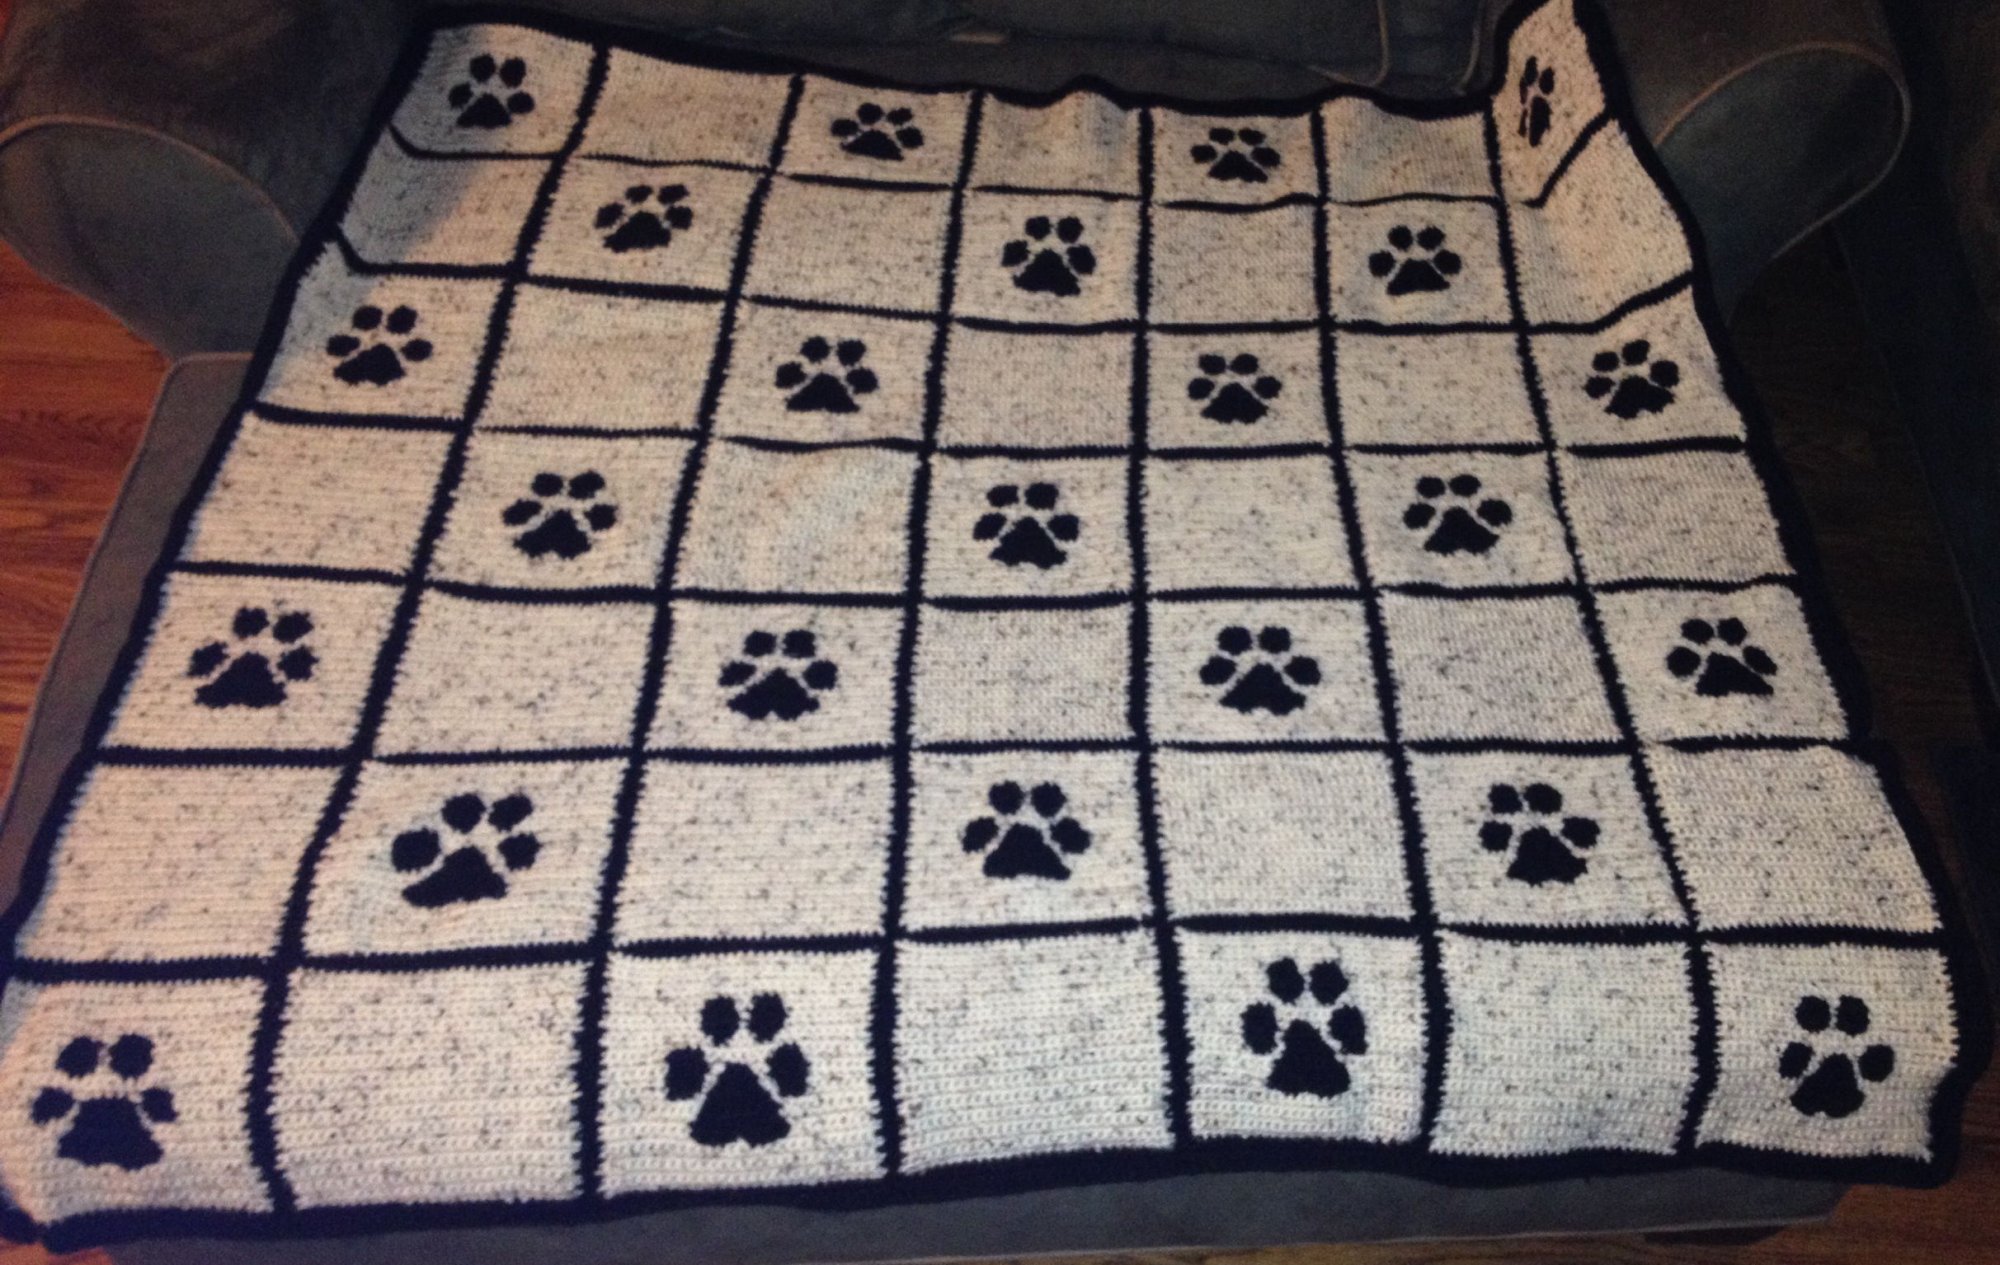 Paw print crochet blanket